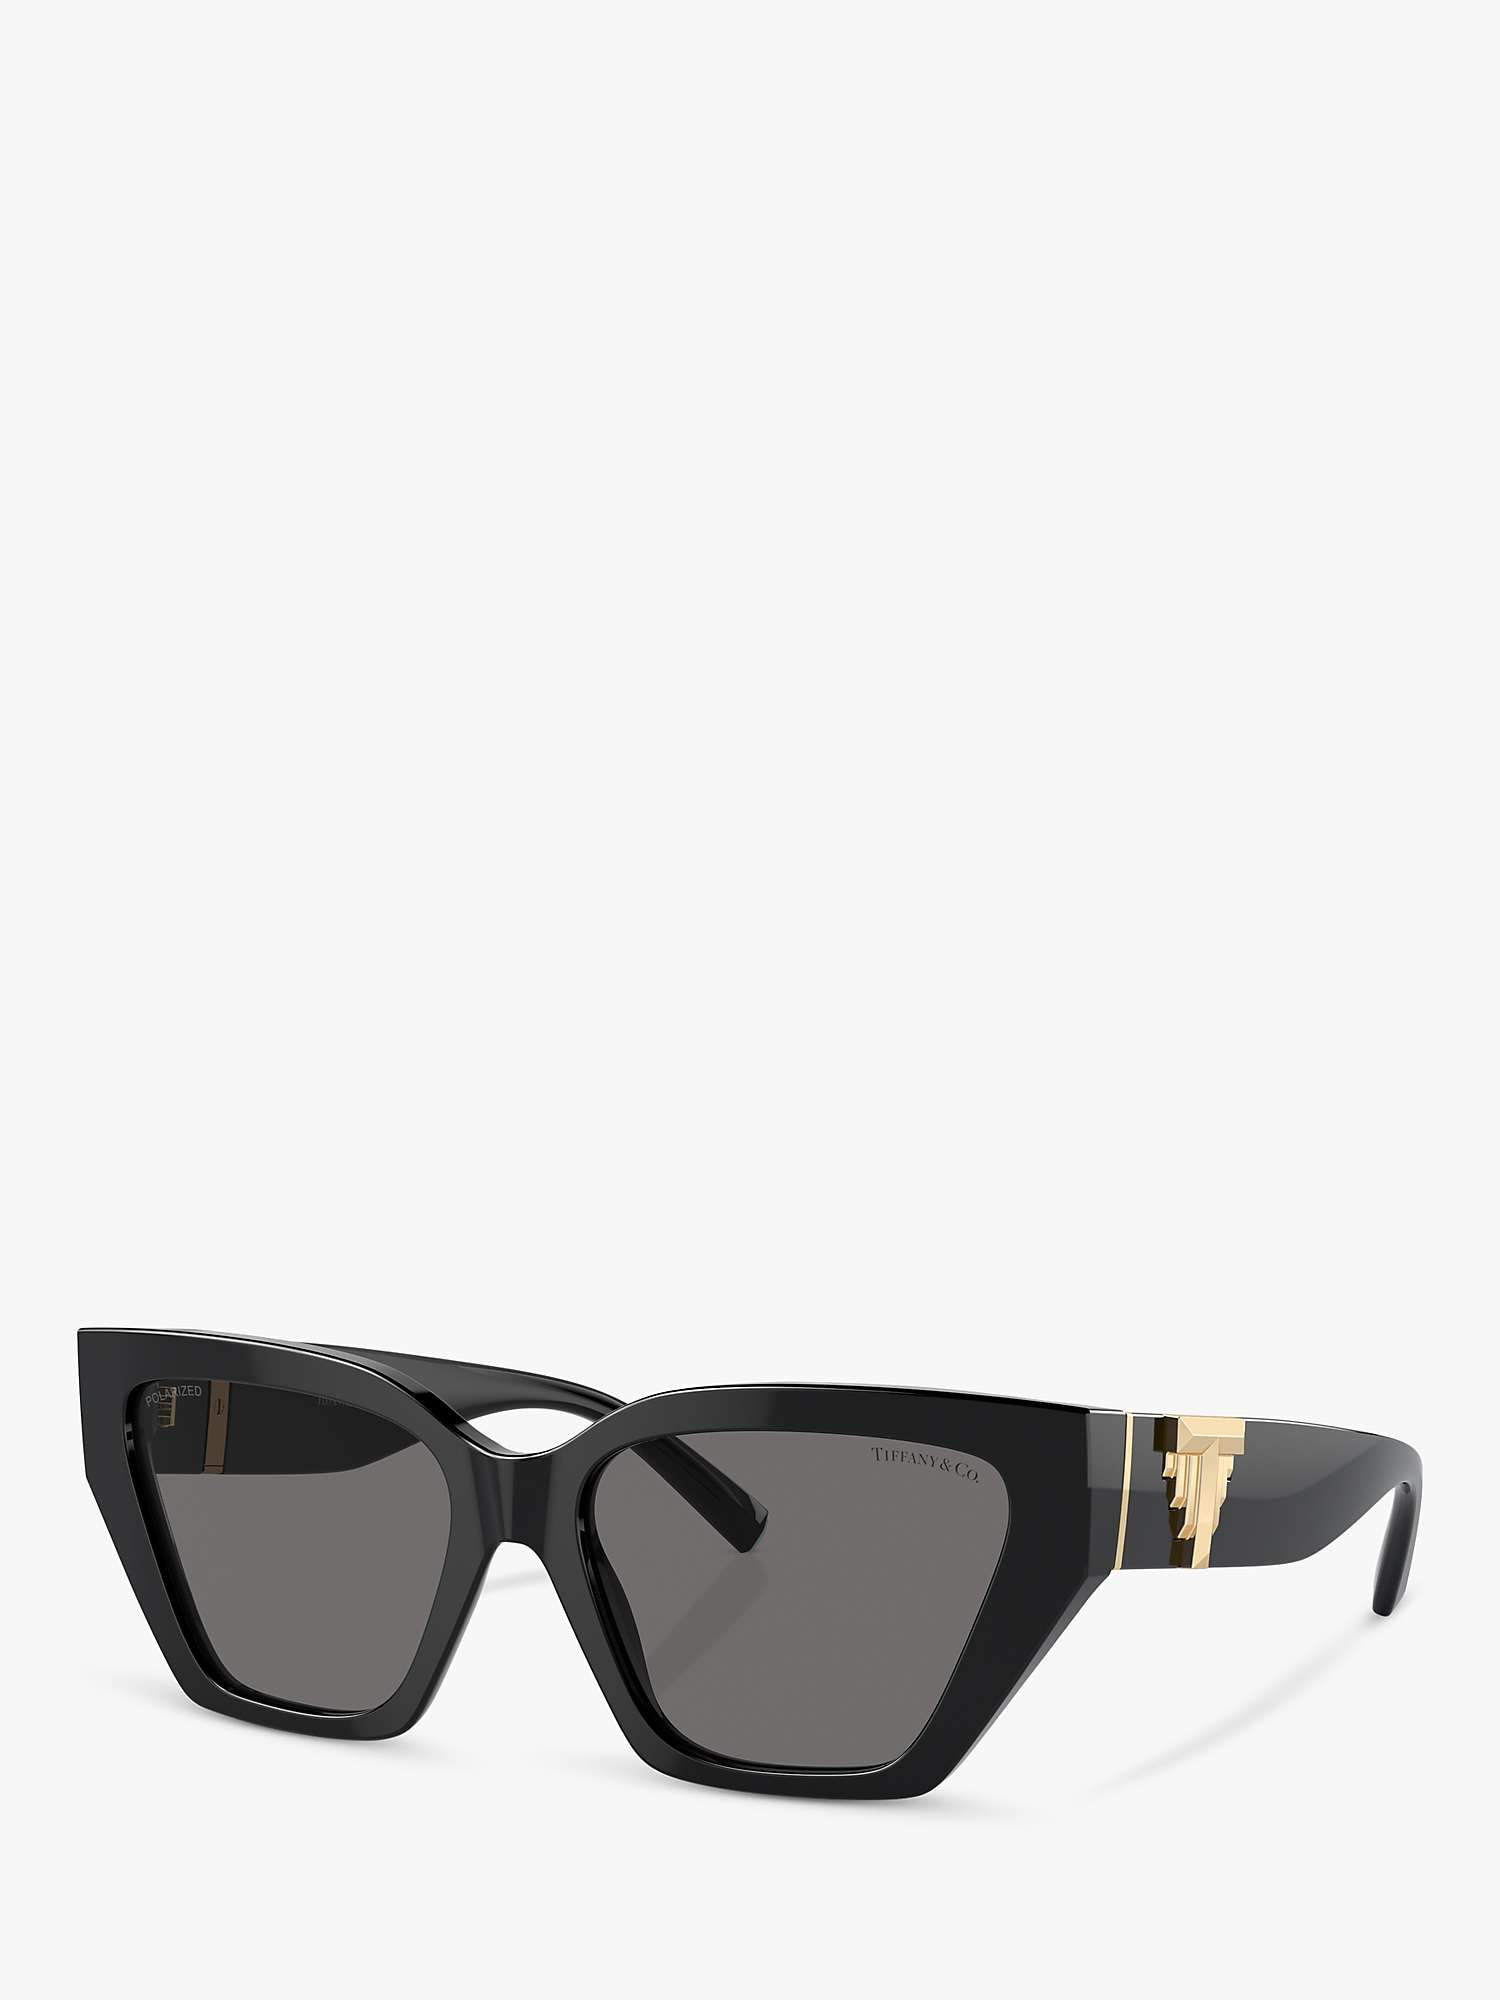 Buy Tiffany & Co TF4218 Women's Squared Cat Eye Sunglasses, Black Online at johnlewis.com